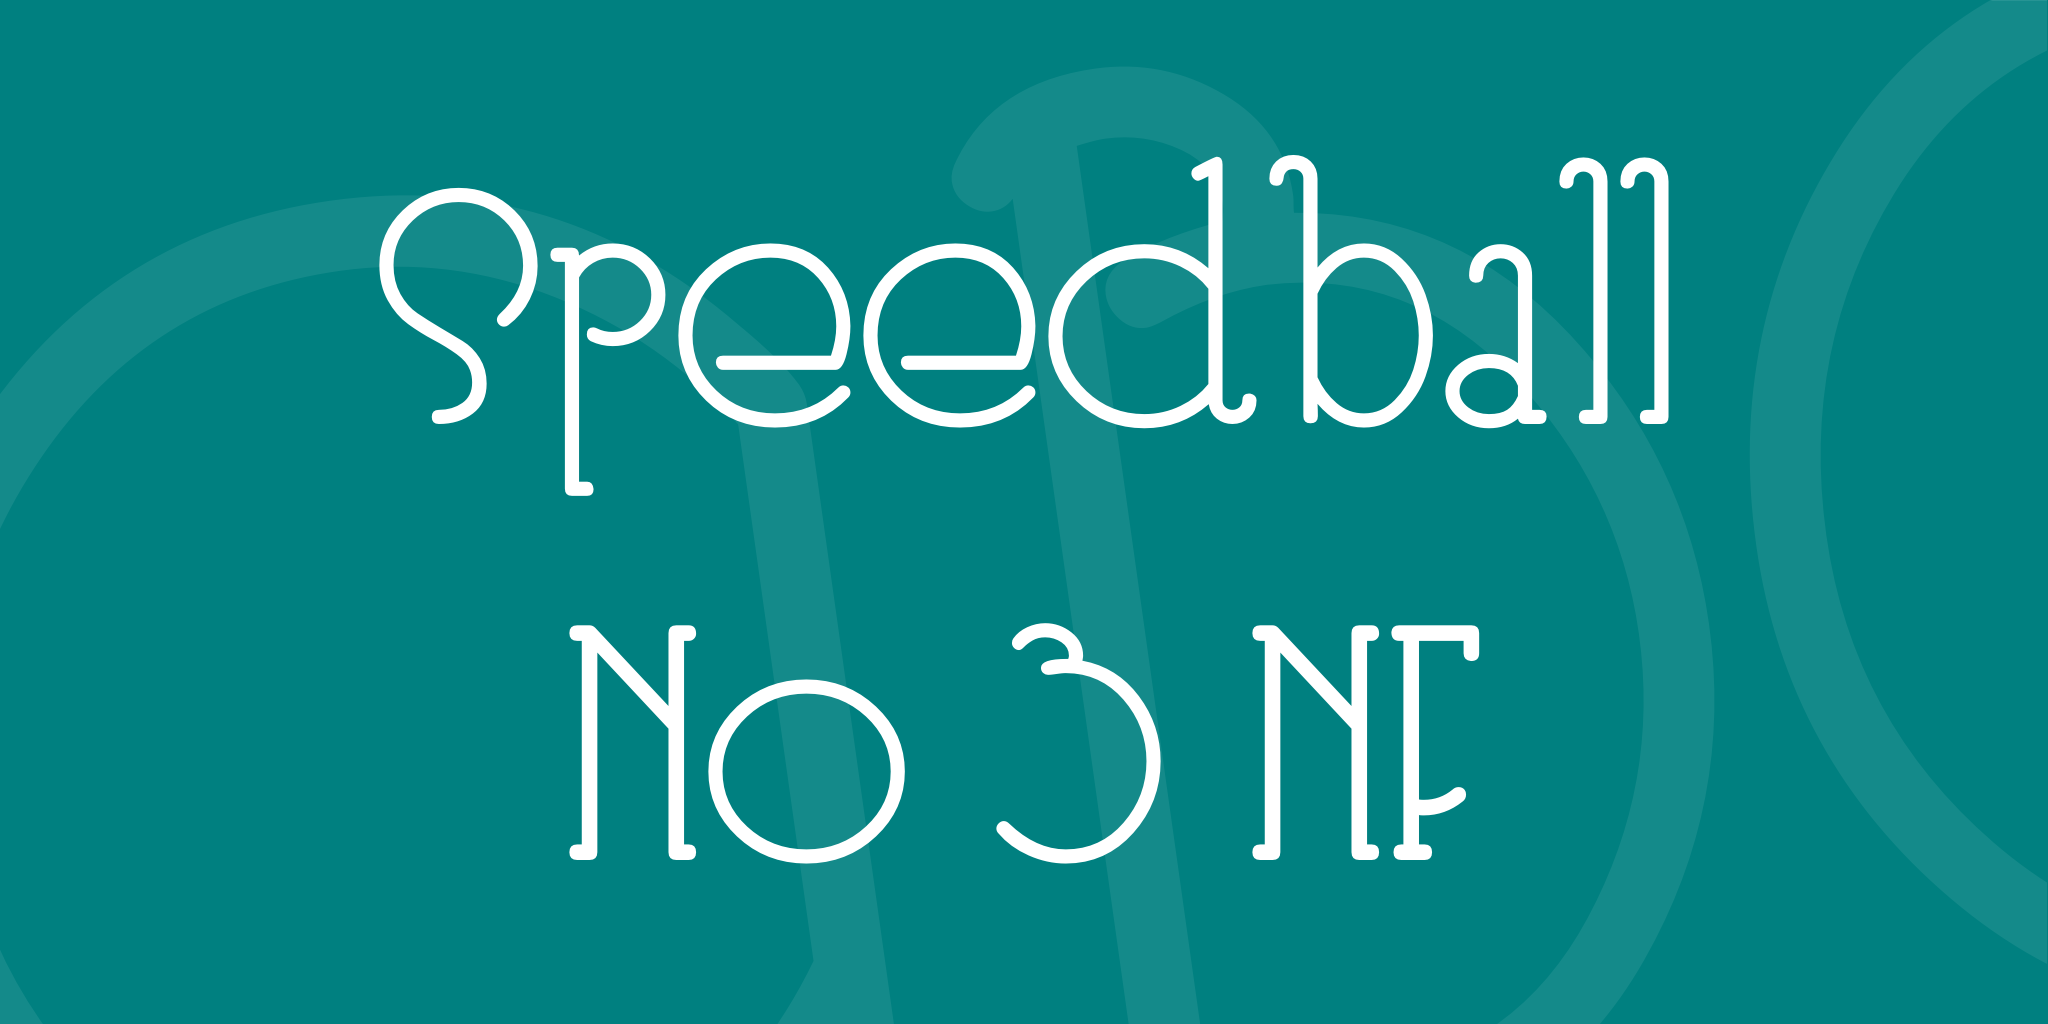 Speedball No 3 Nf